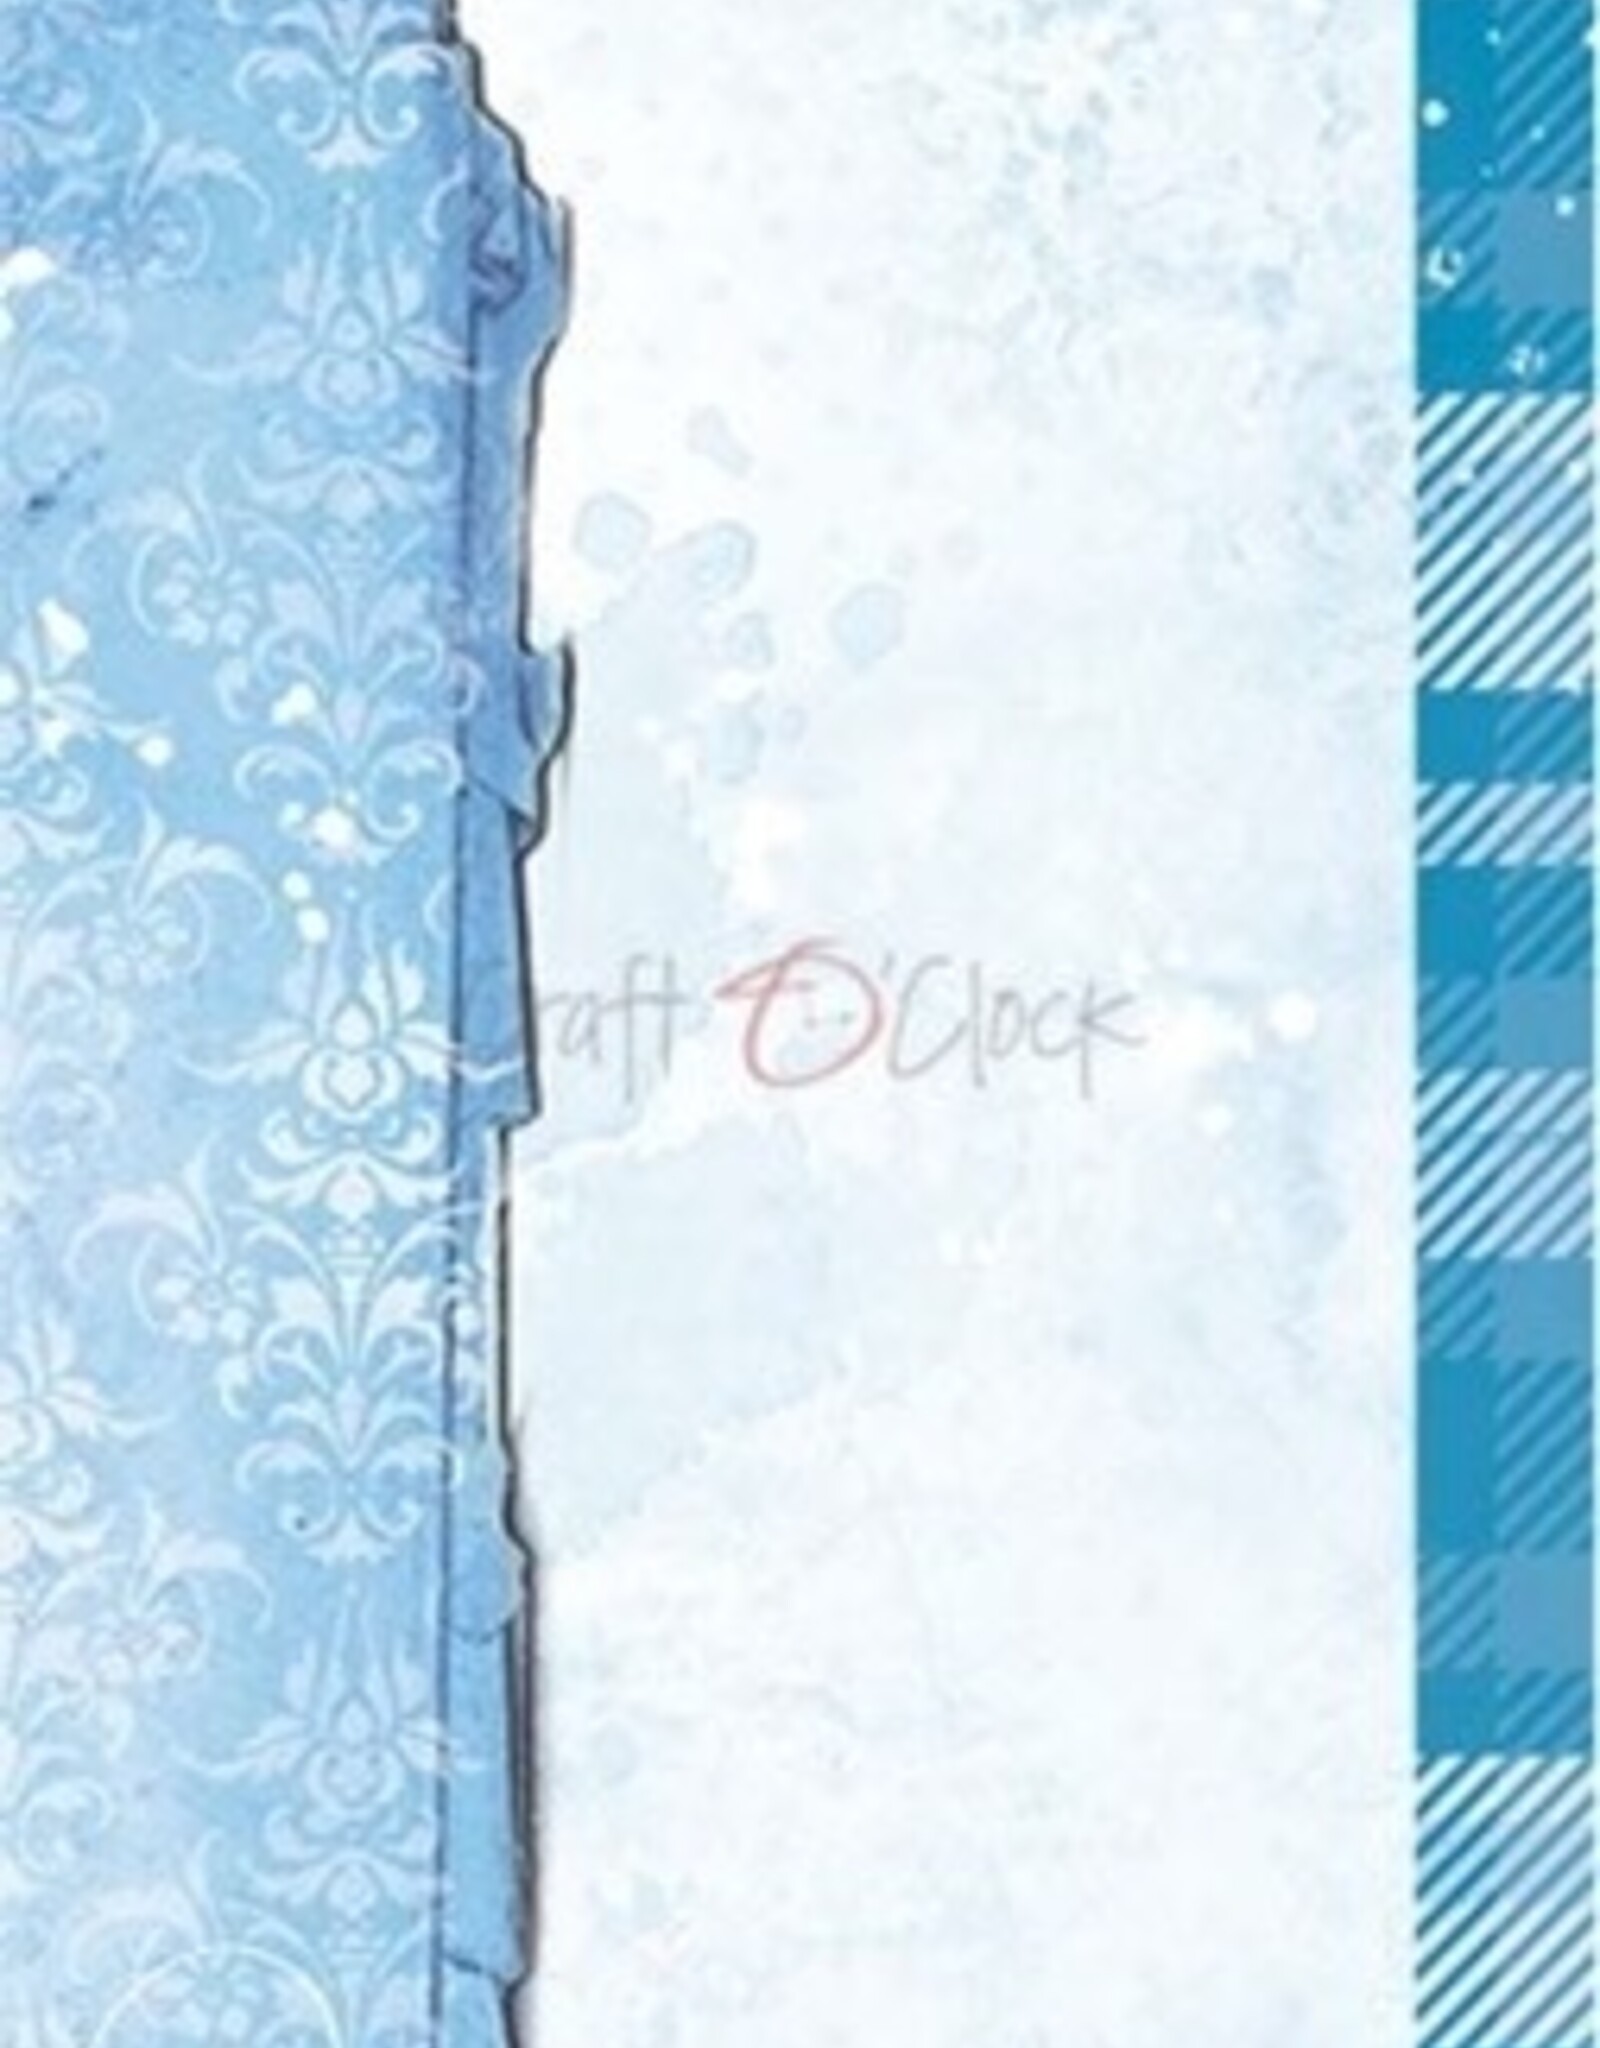 Craft O'Clock PREORDER  Craft O' Clock - Oh, Boy! - Paperpad 15.75 x 30.5 cm